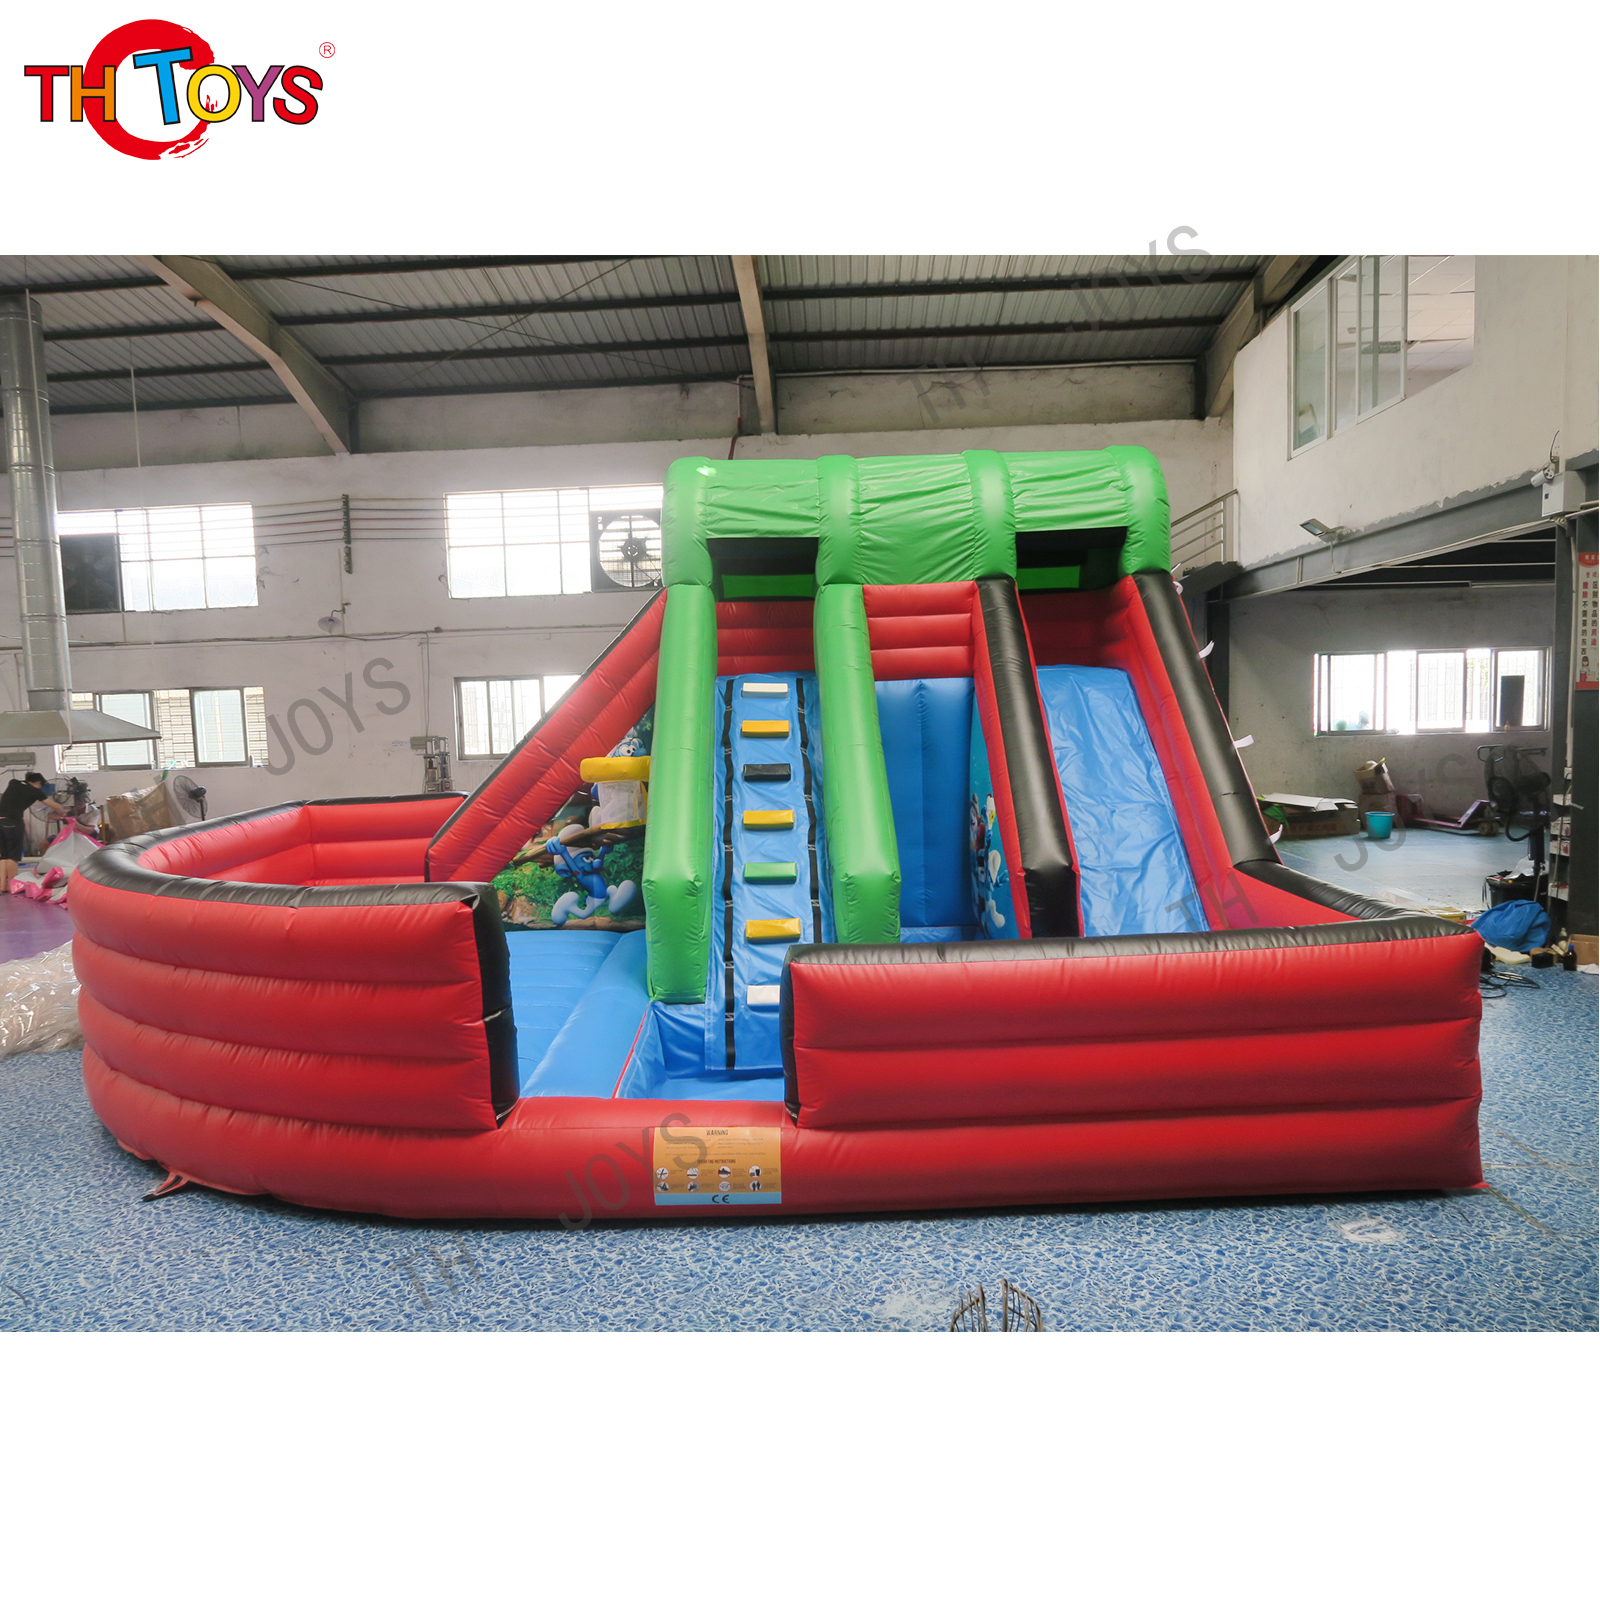 Inflatable slide-37